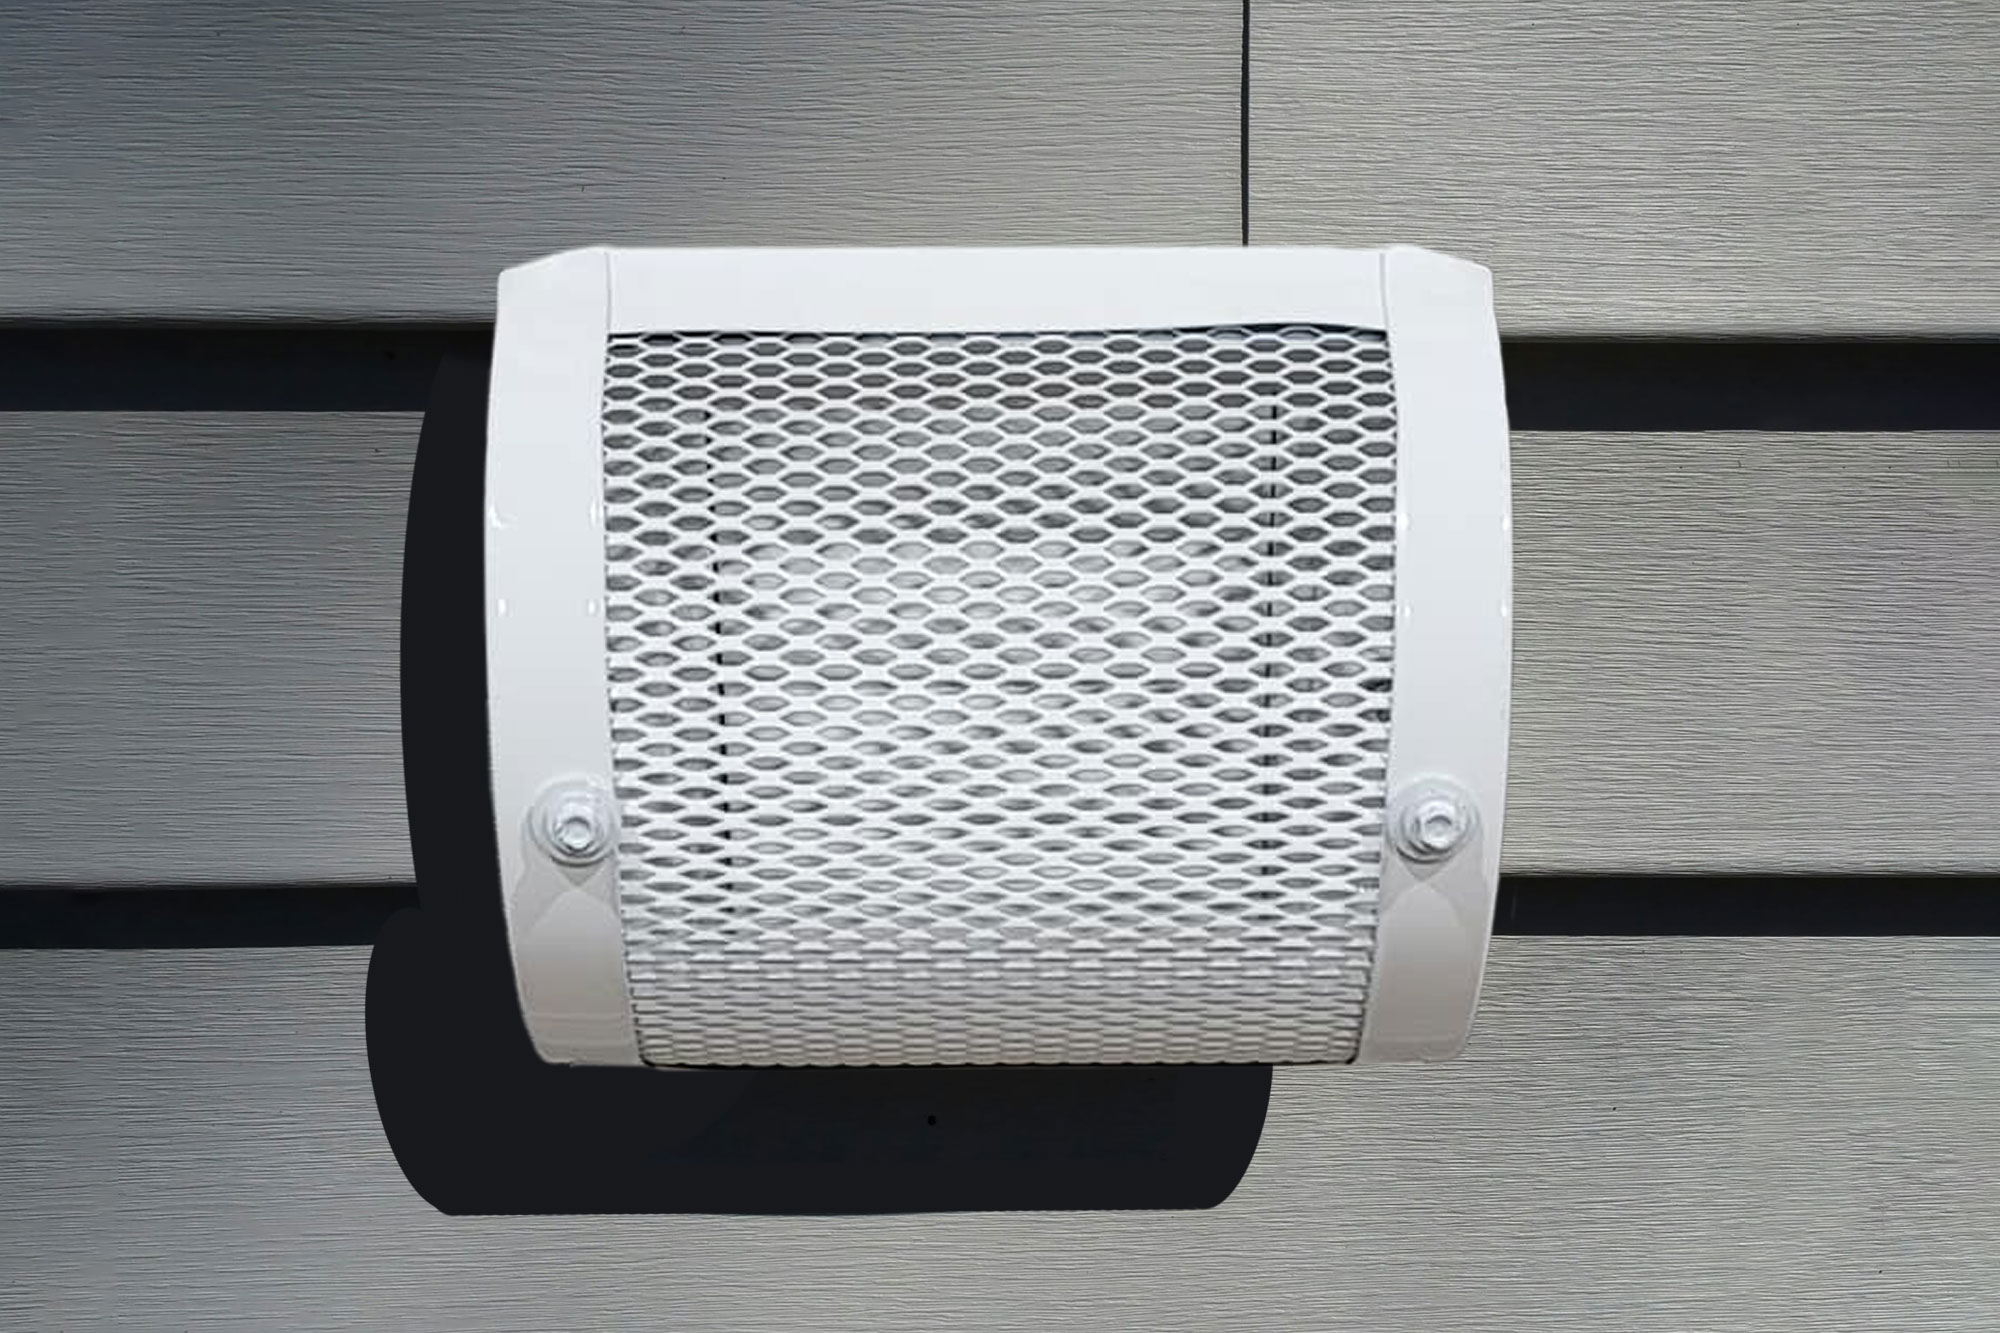 Bathroom vent after XclusionPro® Bathroom Vent Guard (BVG) installation